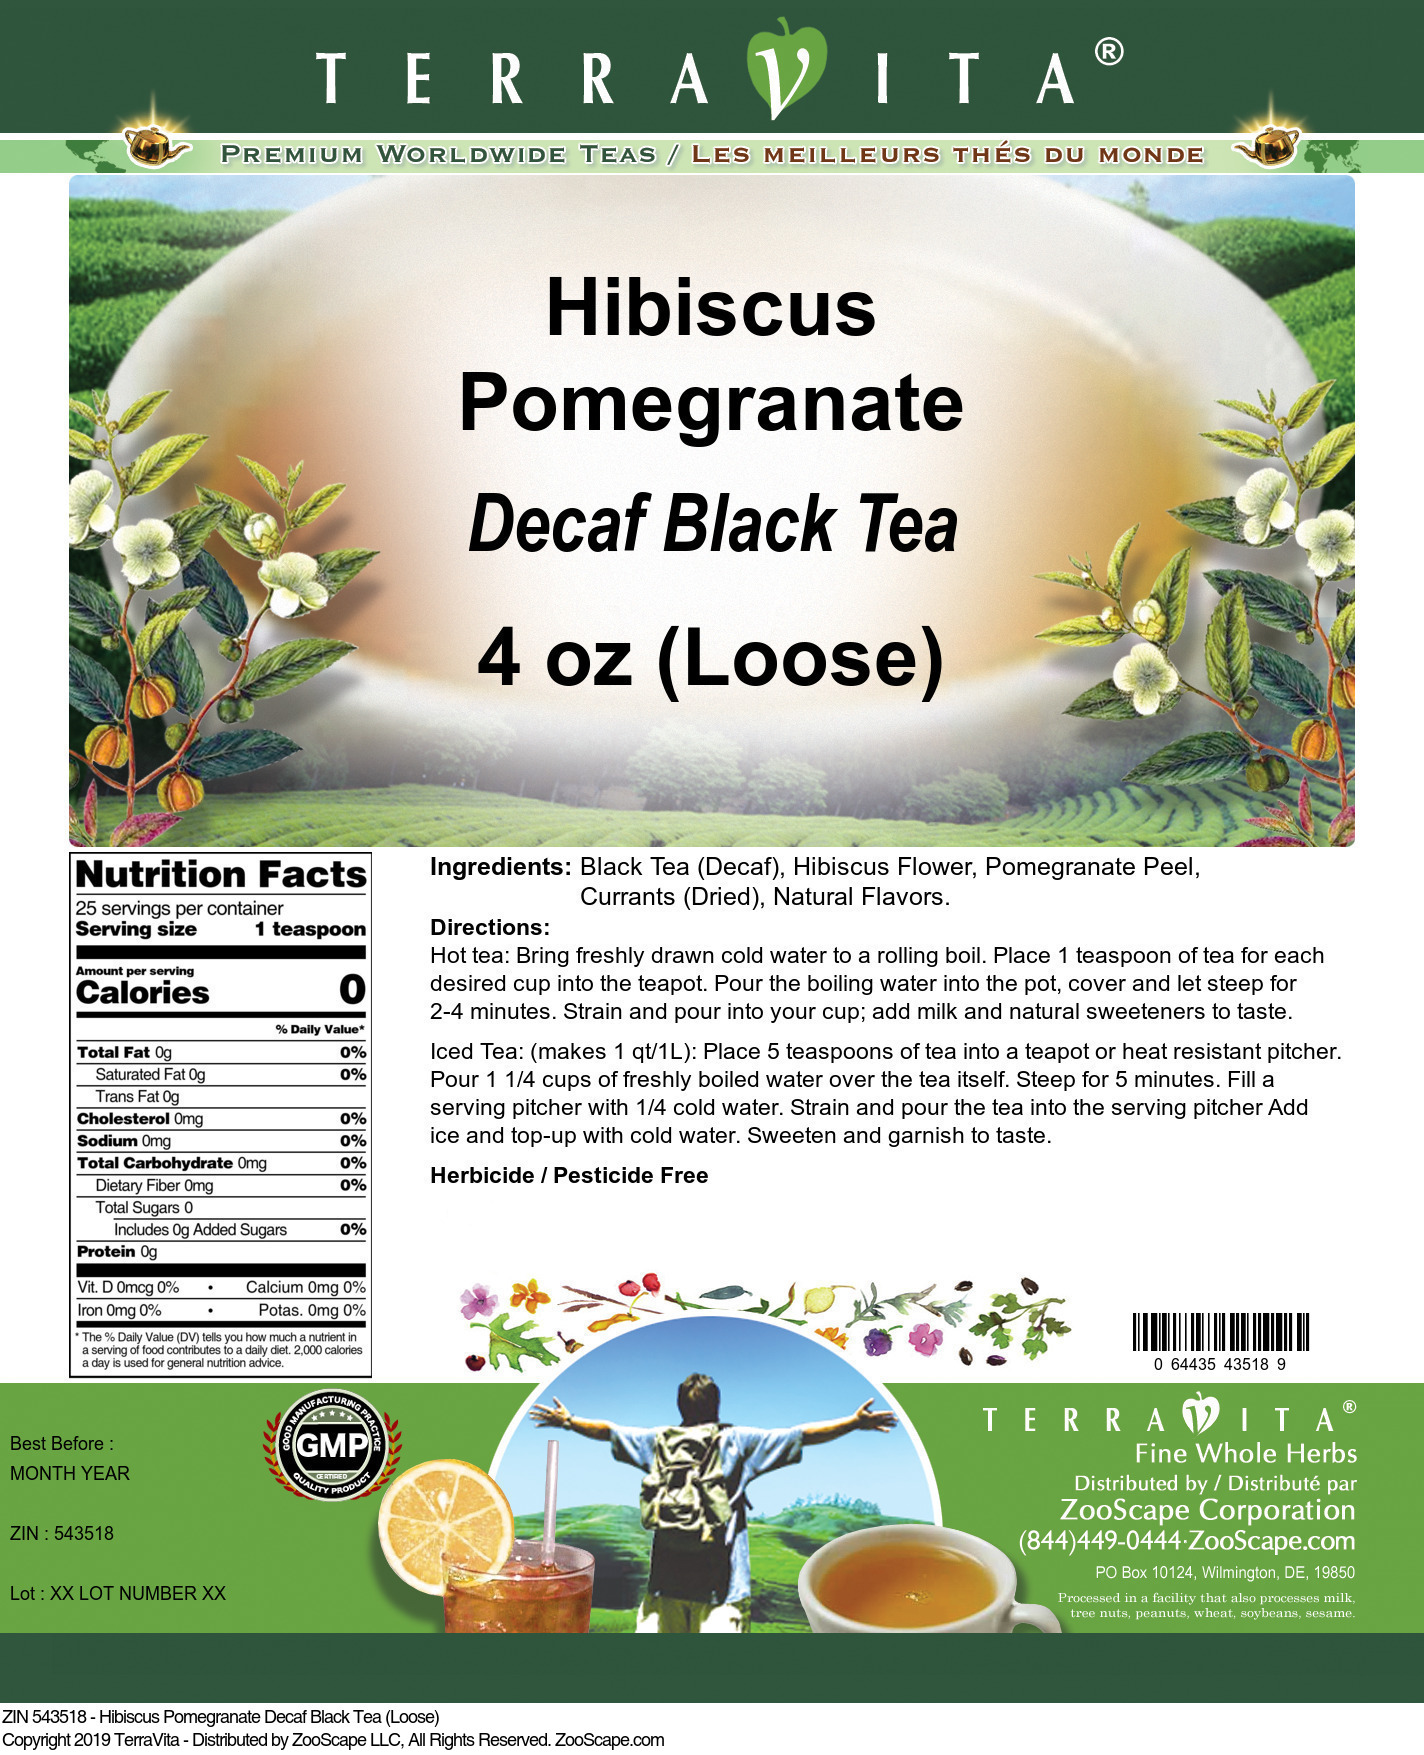 Hibiscus Pomegranate Decaf Black Tea (Loose) - Label